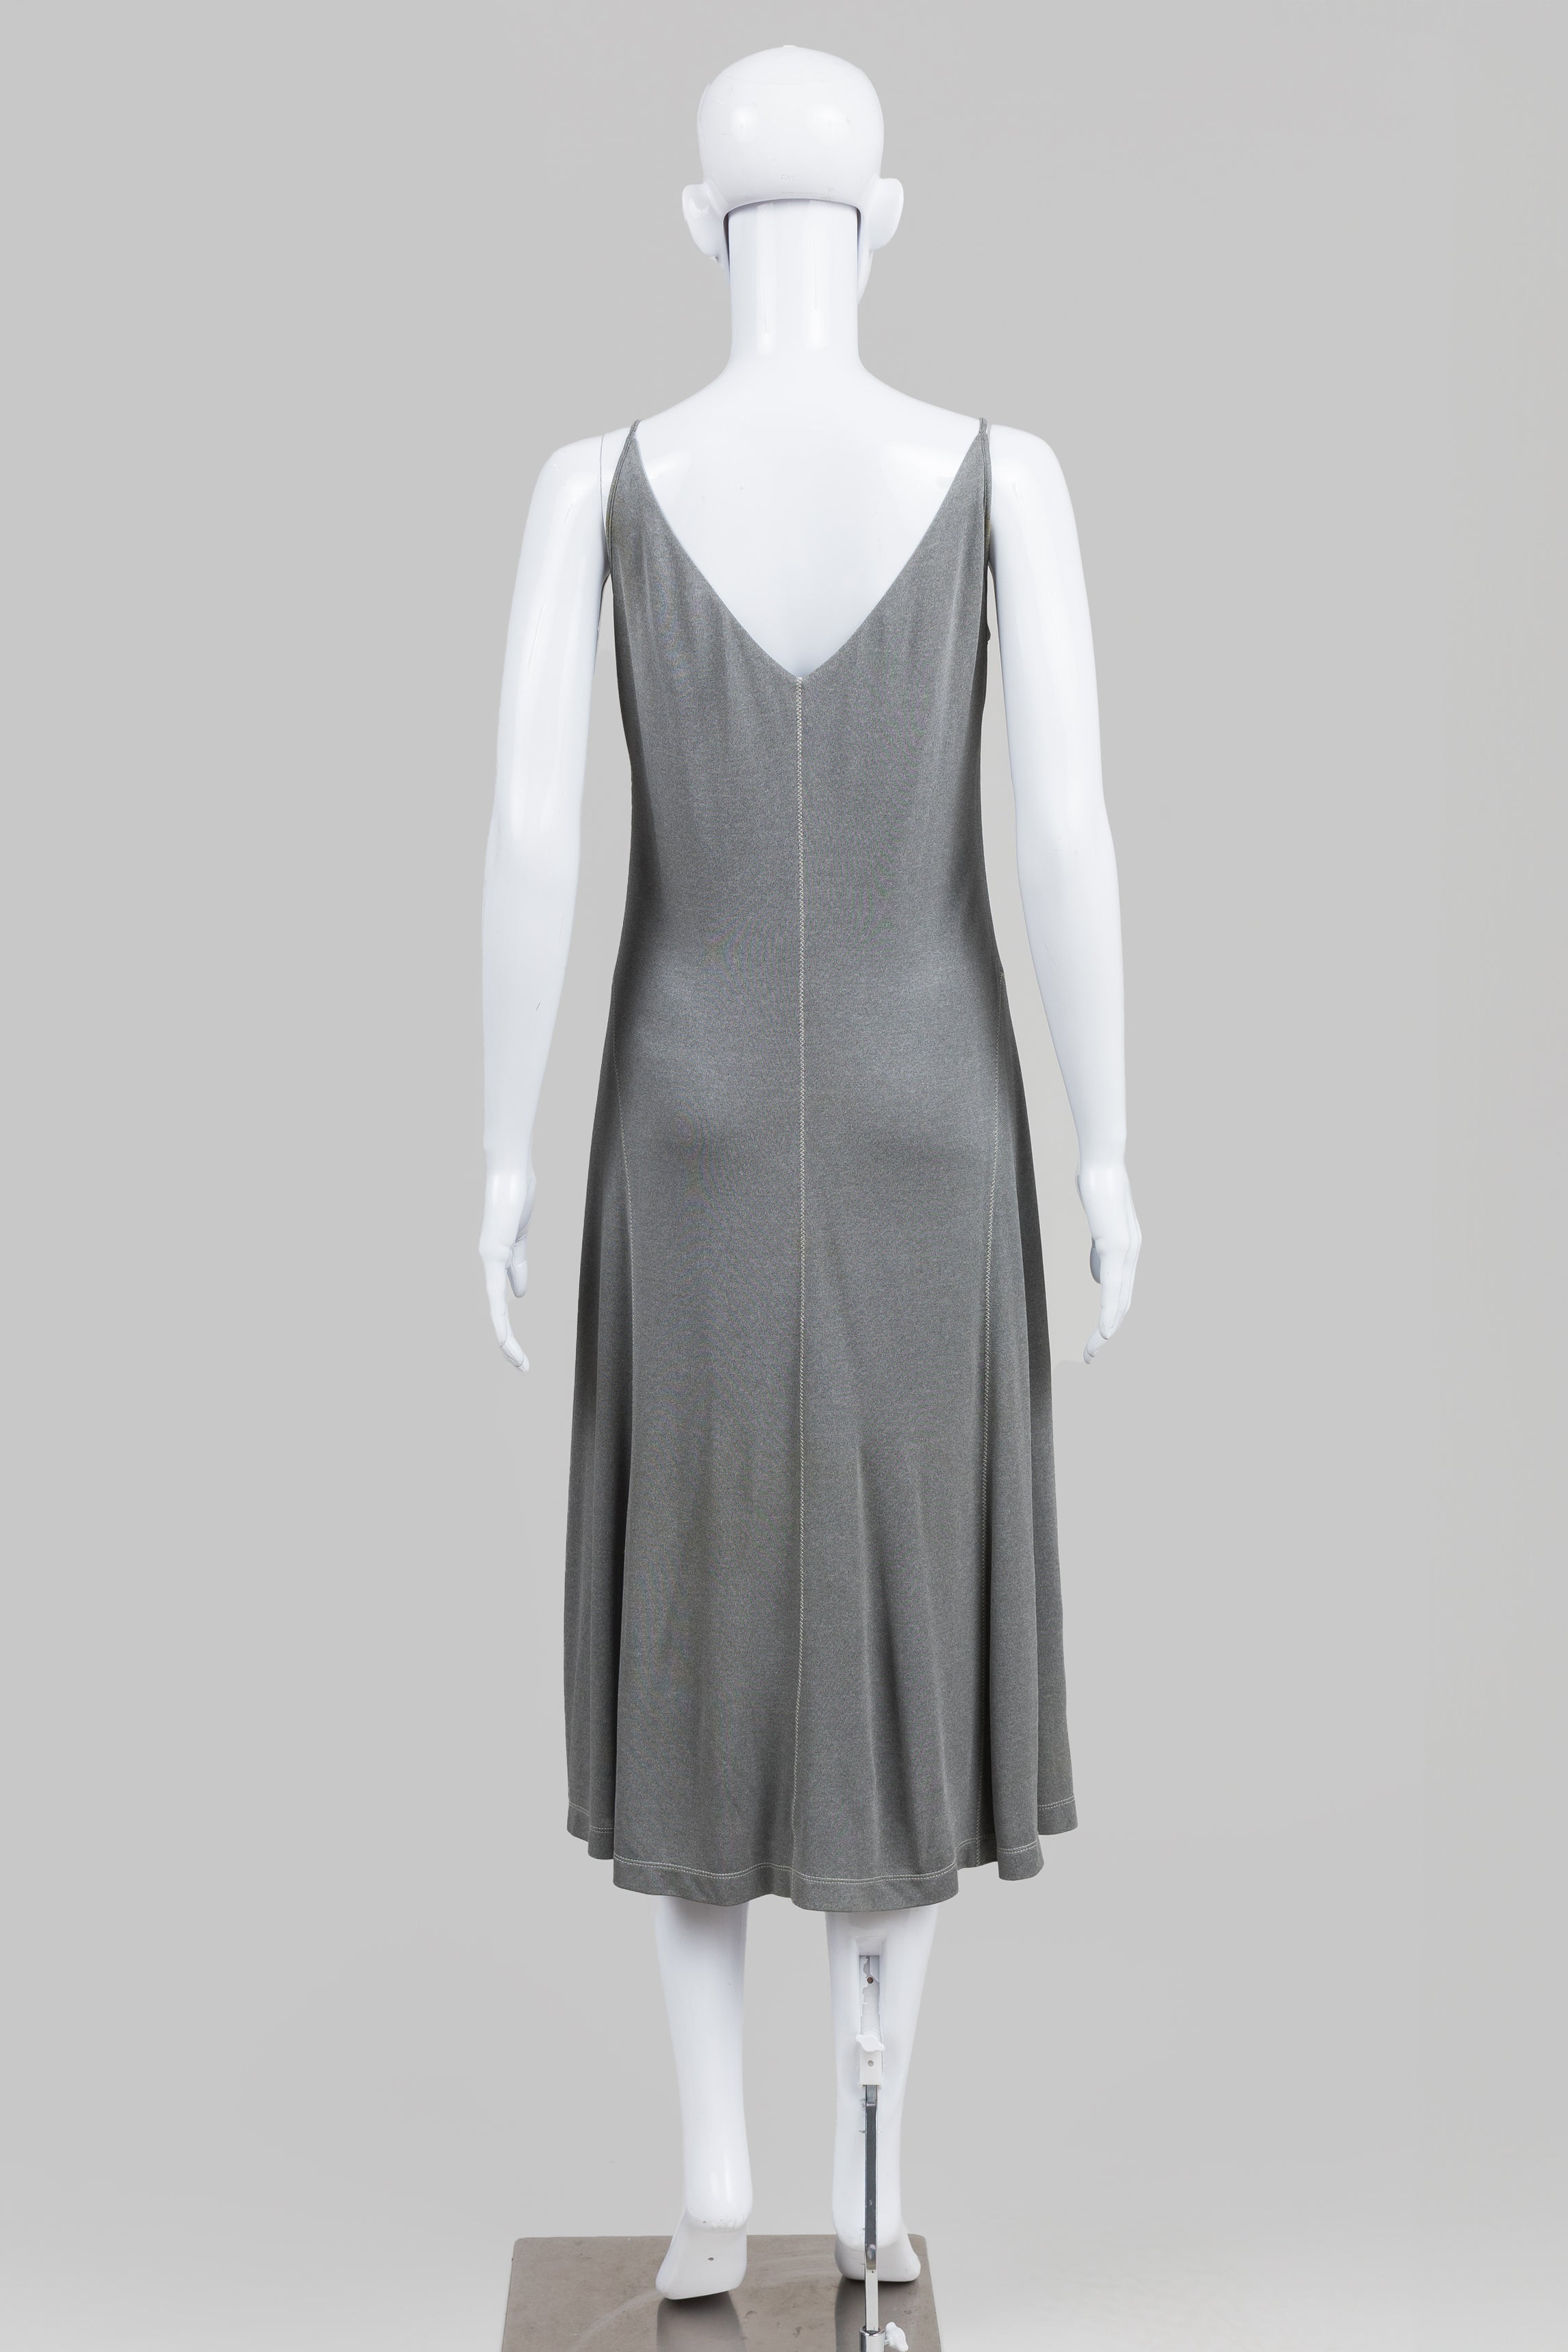 Lida Baday grey jersey sleeveless midi dress (L)